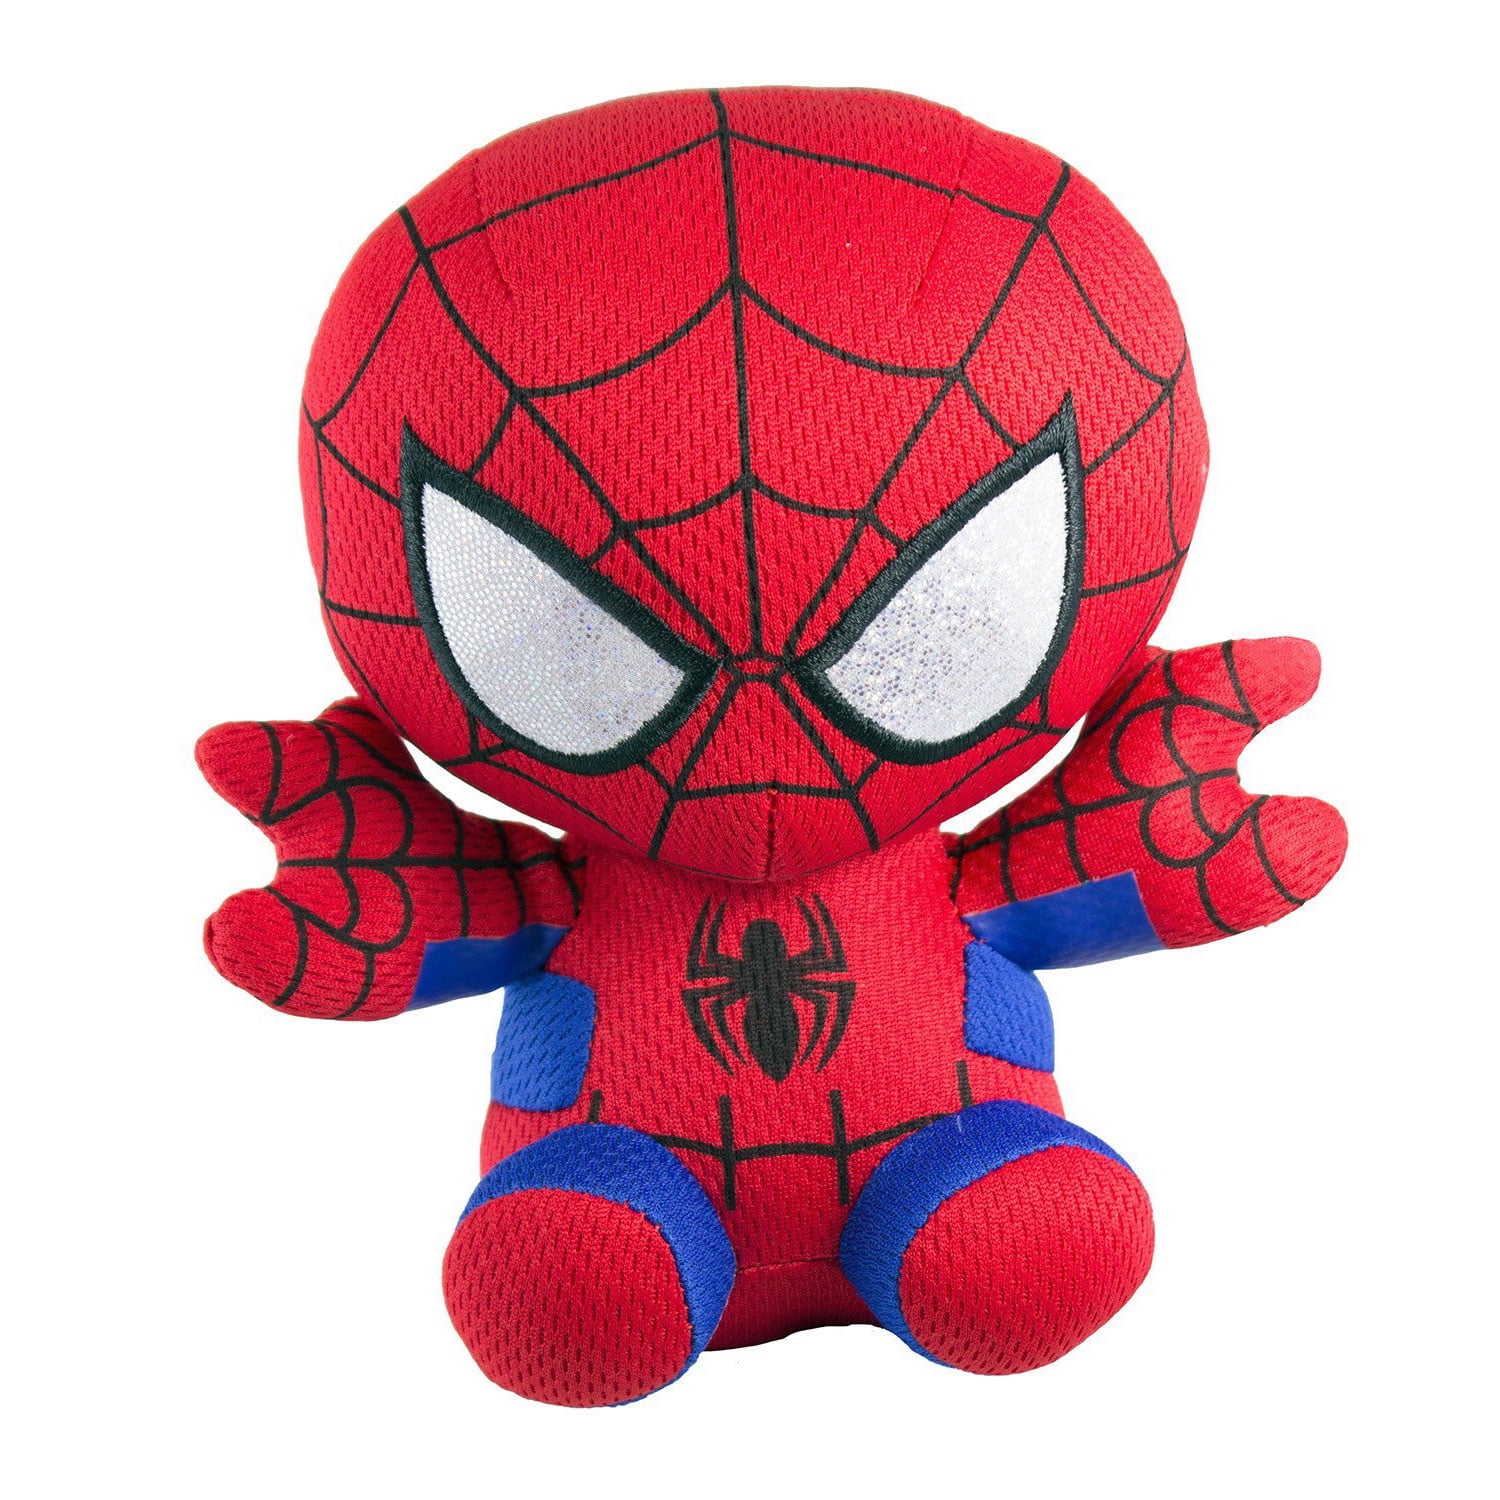 Ty Marvel SpiderMan Small Plush Animal